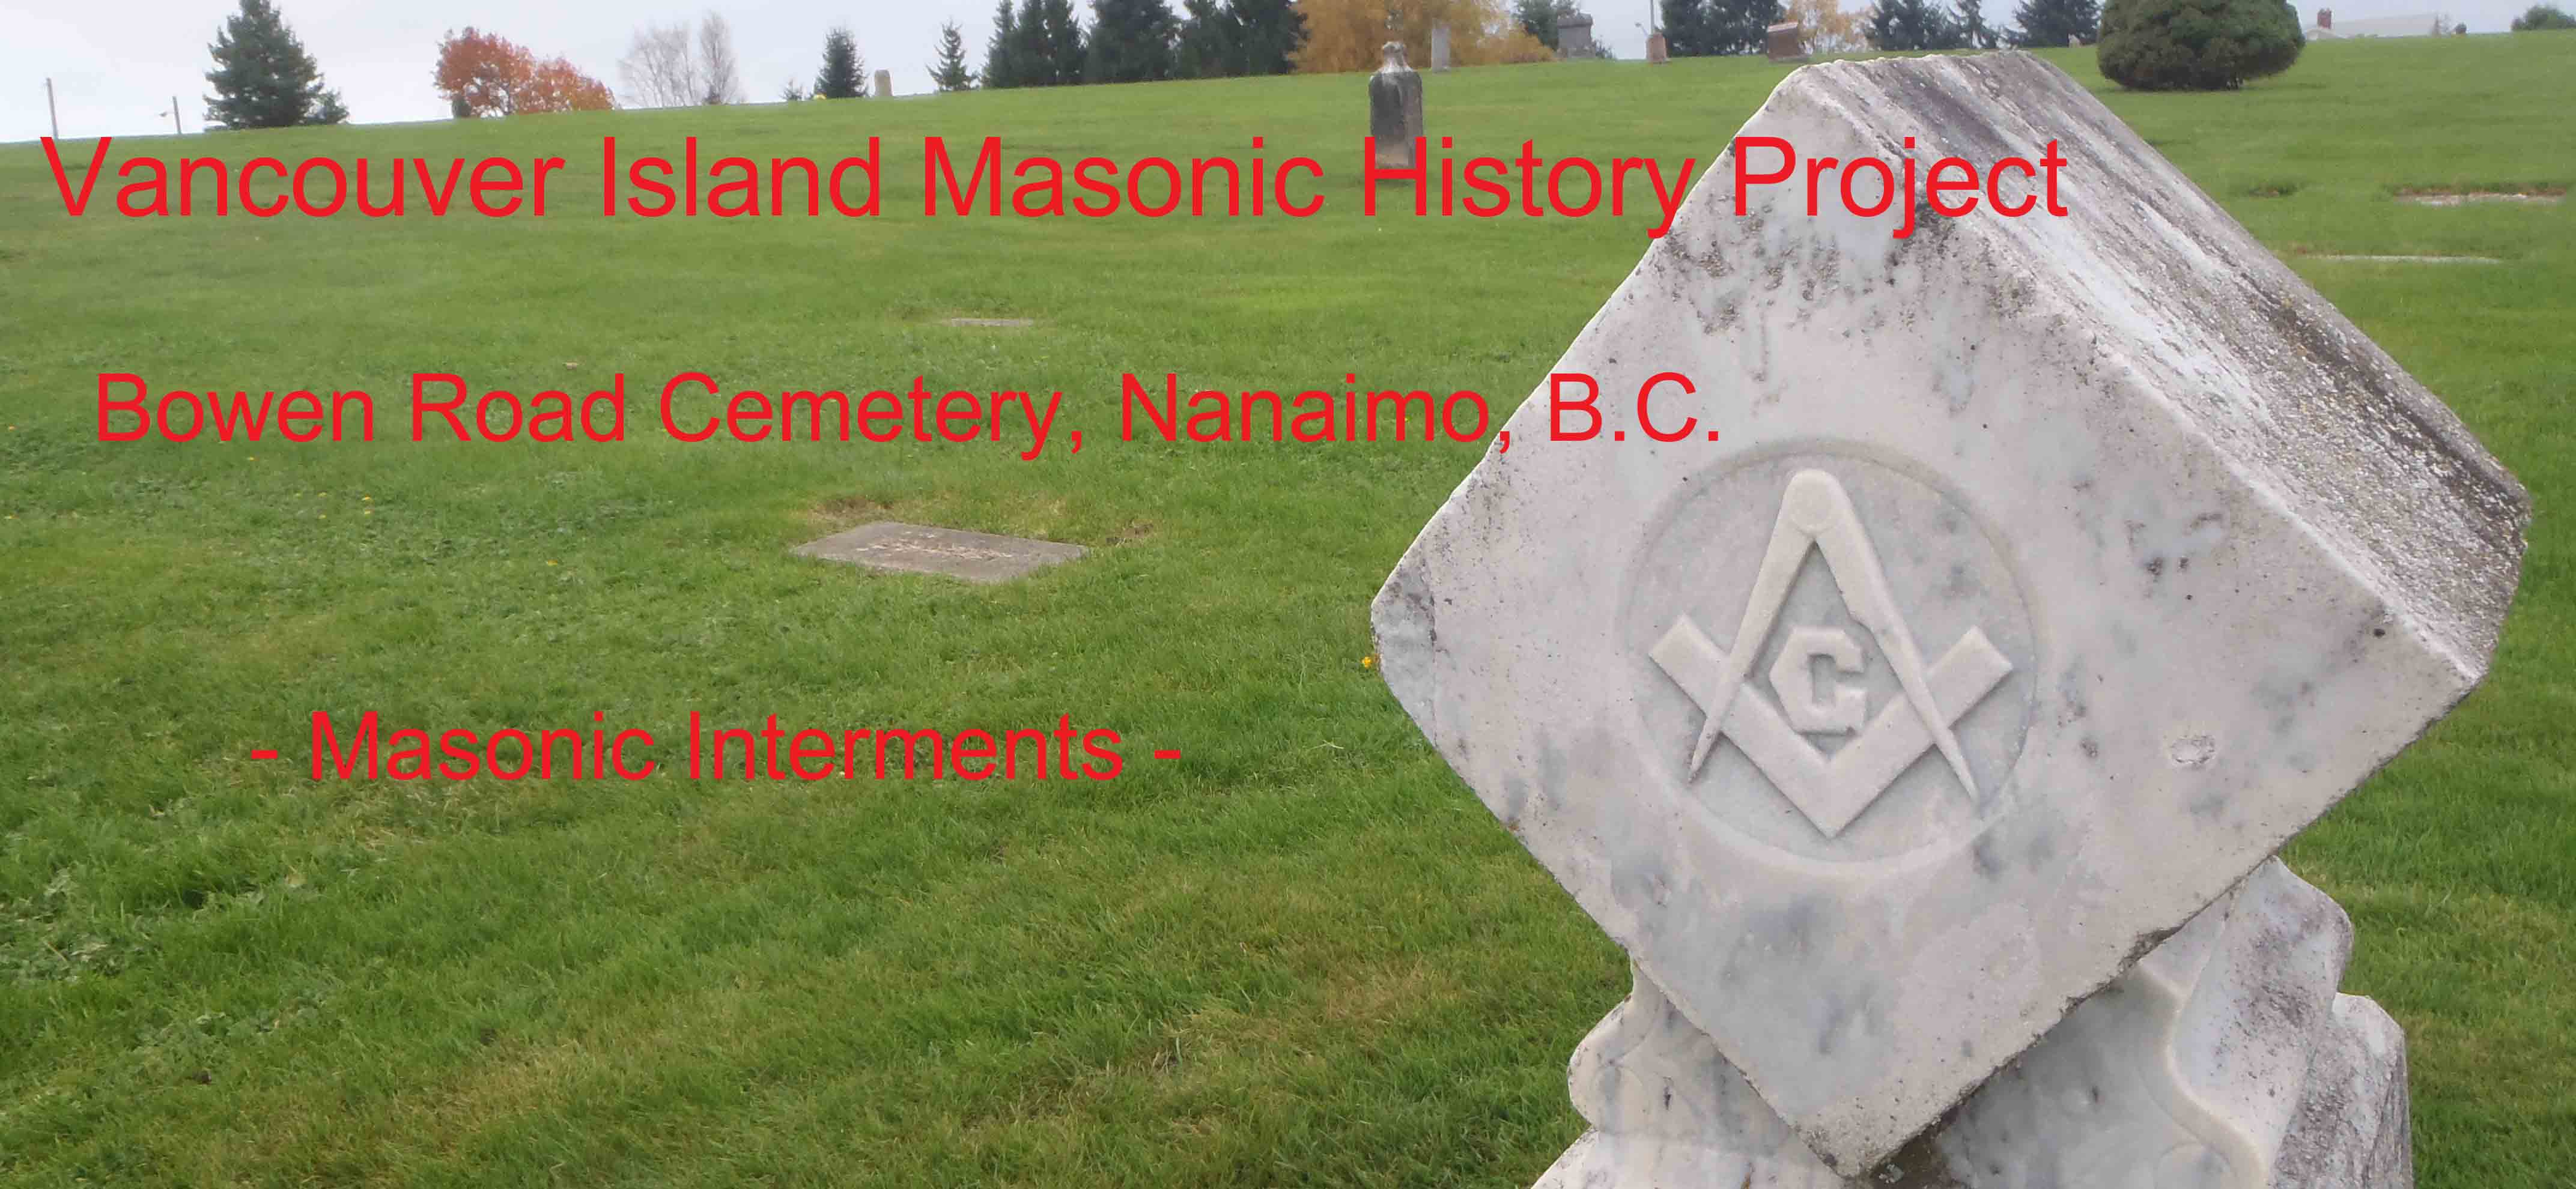 Bowen Road cemetery, Nanaimo - Masonic Interments